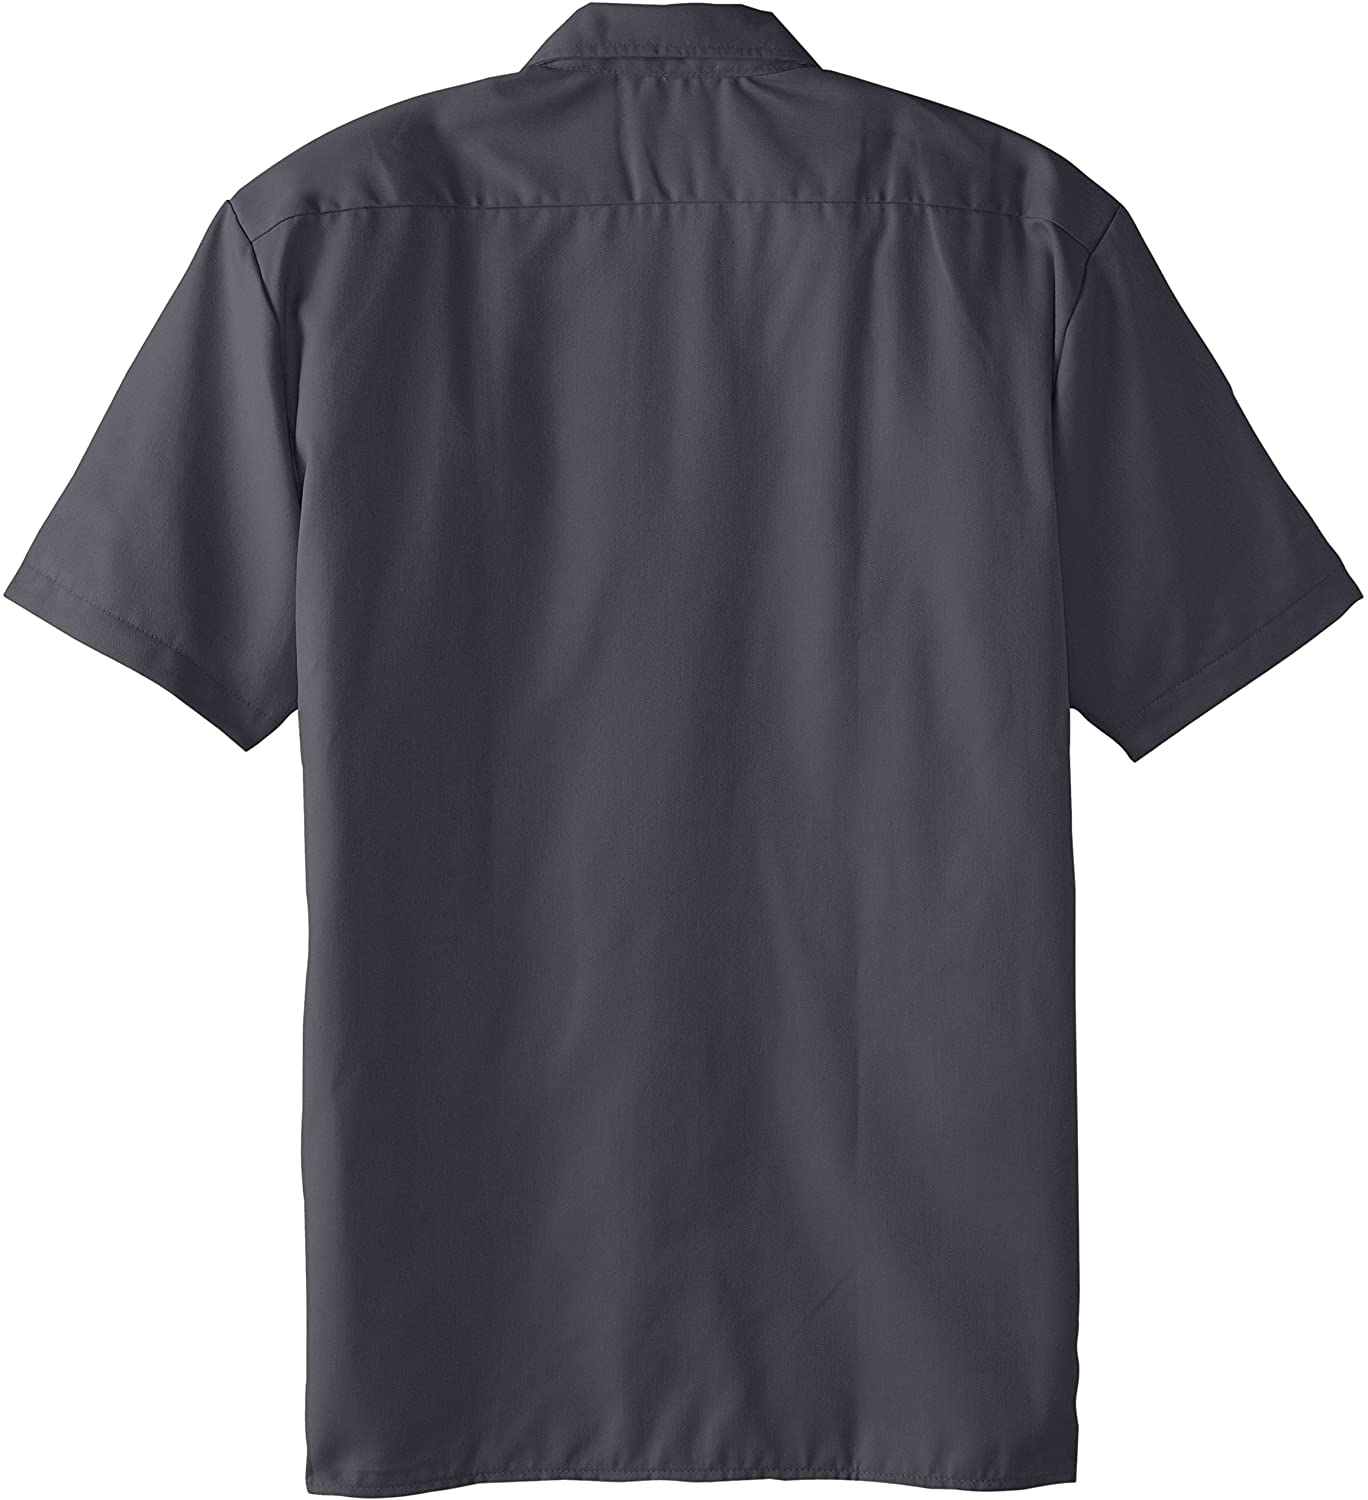 Dickies Men's Short-Sleeve Work Shirt, White, Medium, Charcoal, Size ...